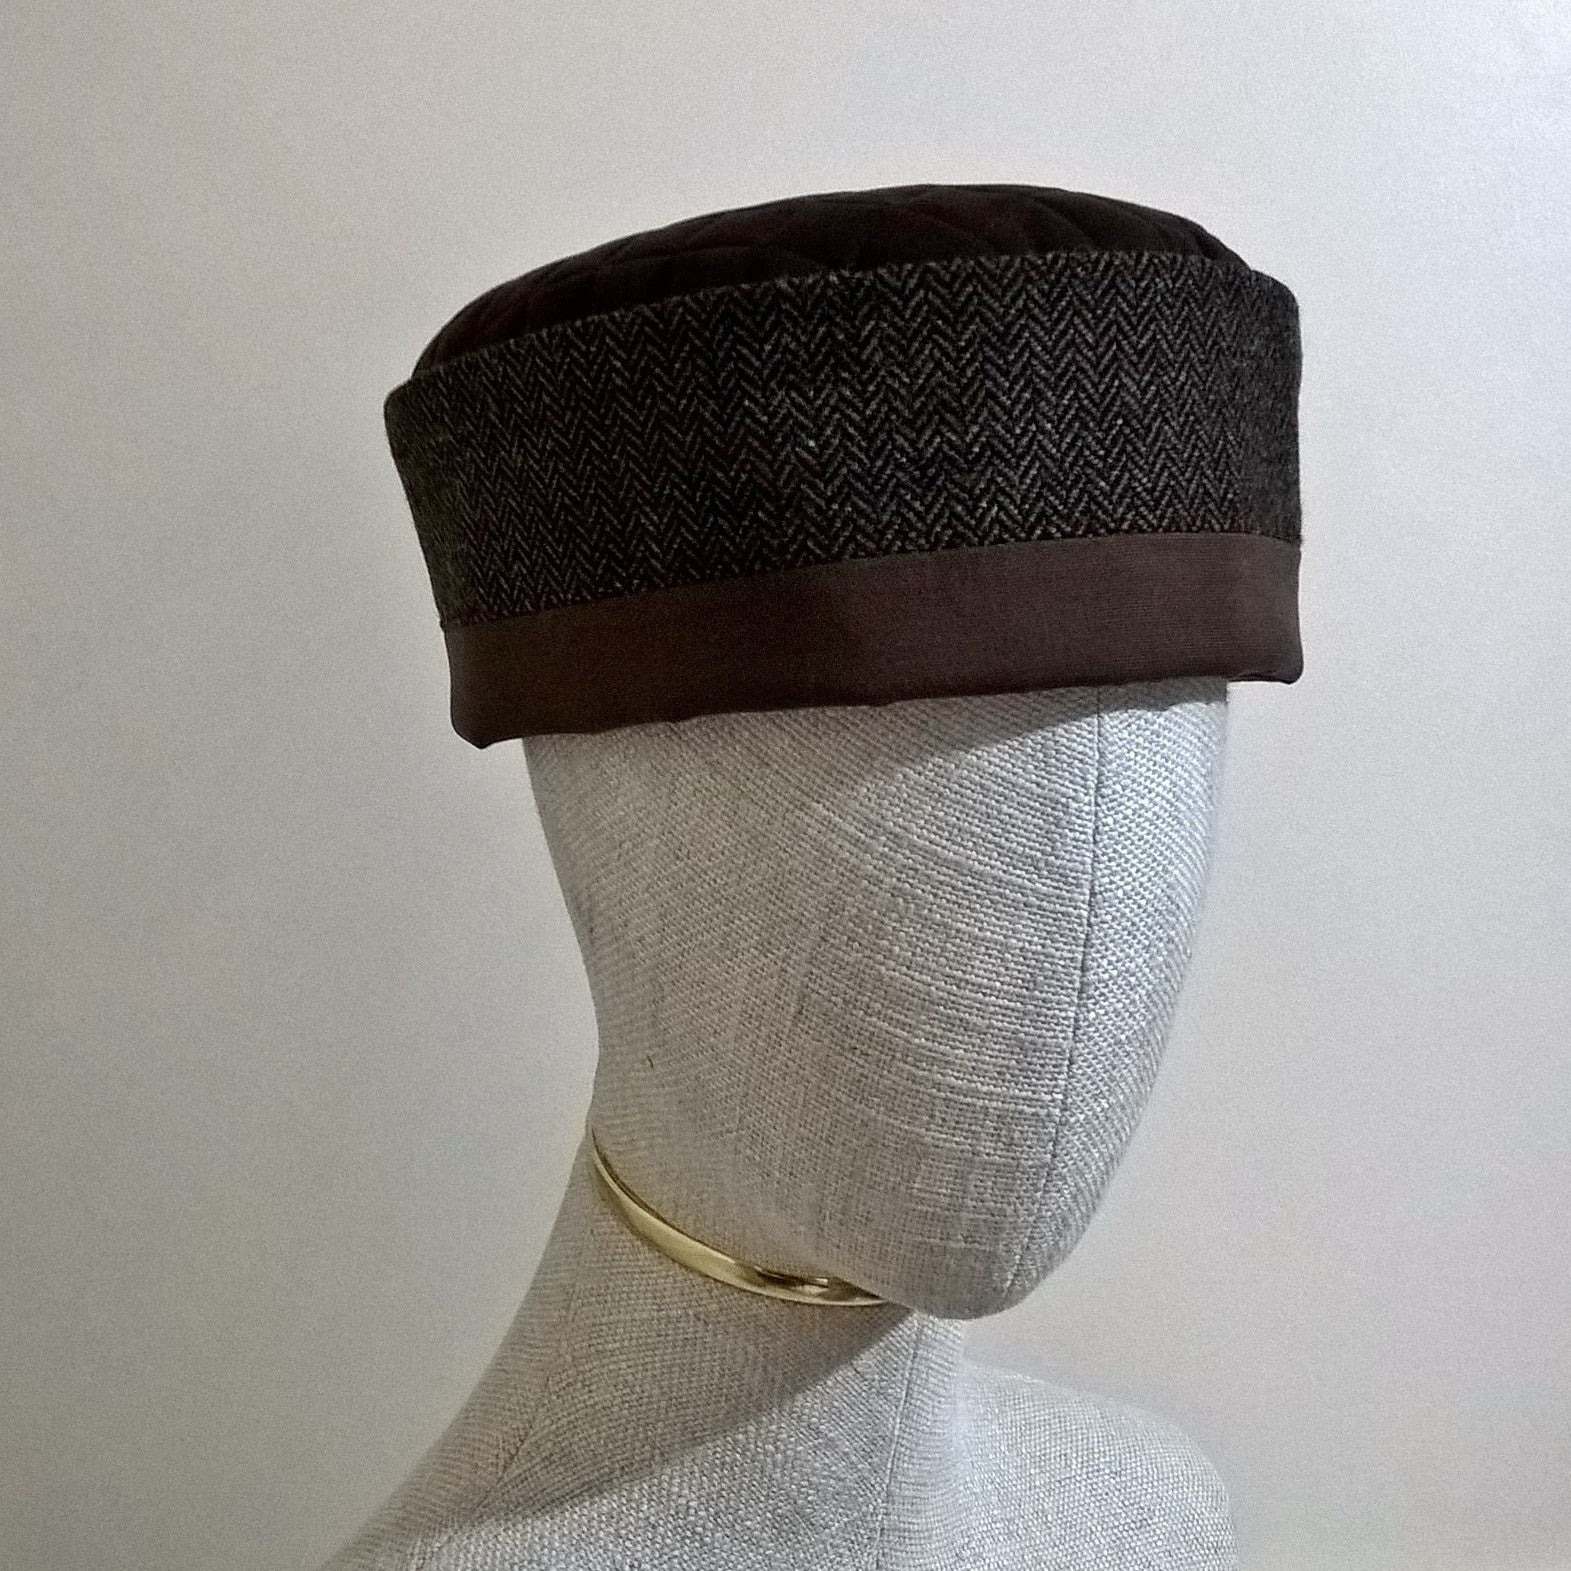 Wool pillbox cap in brown herringbone with quilted tip